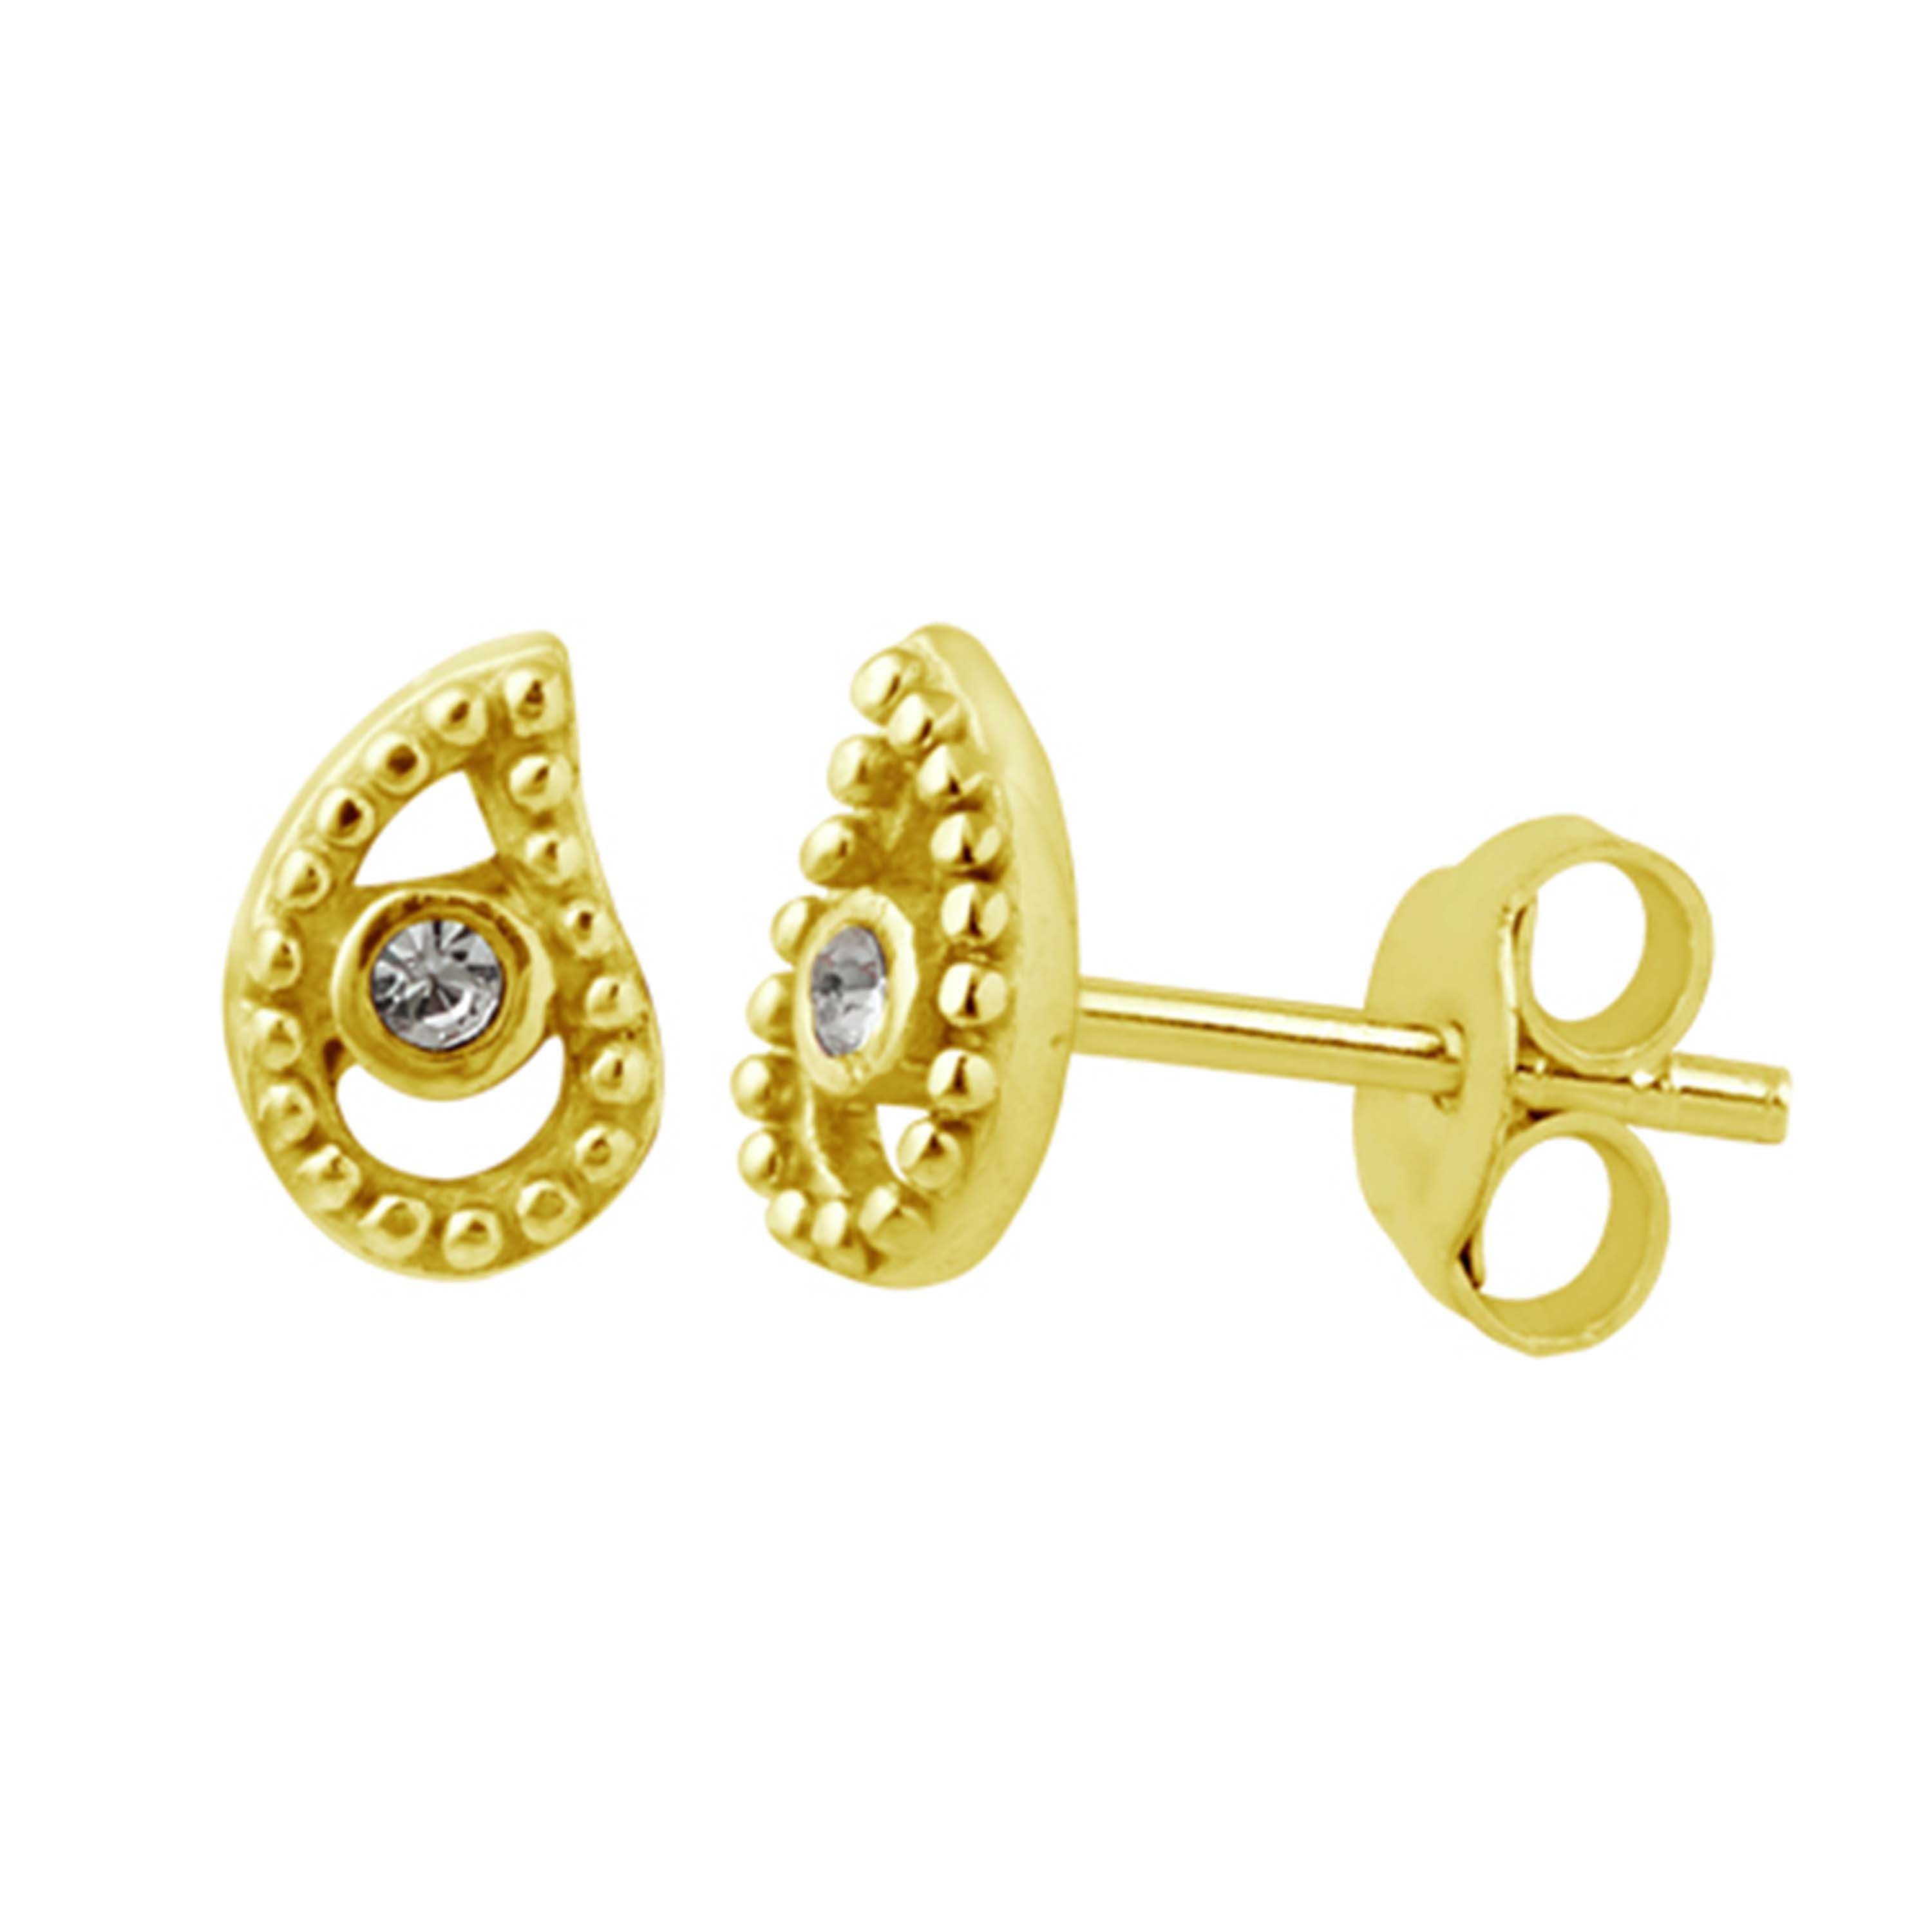 Paisley Stud Earrings - Gold